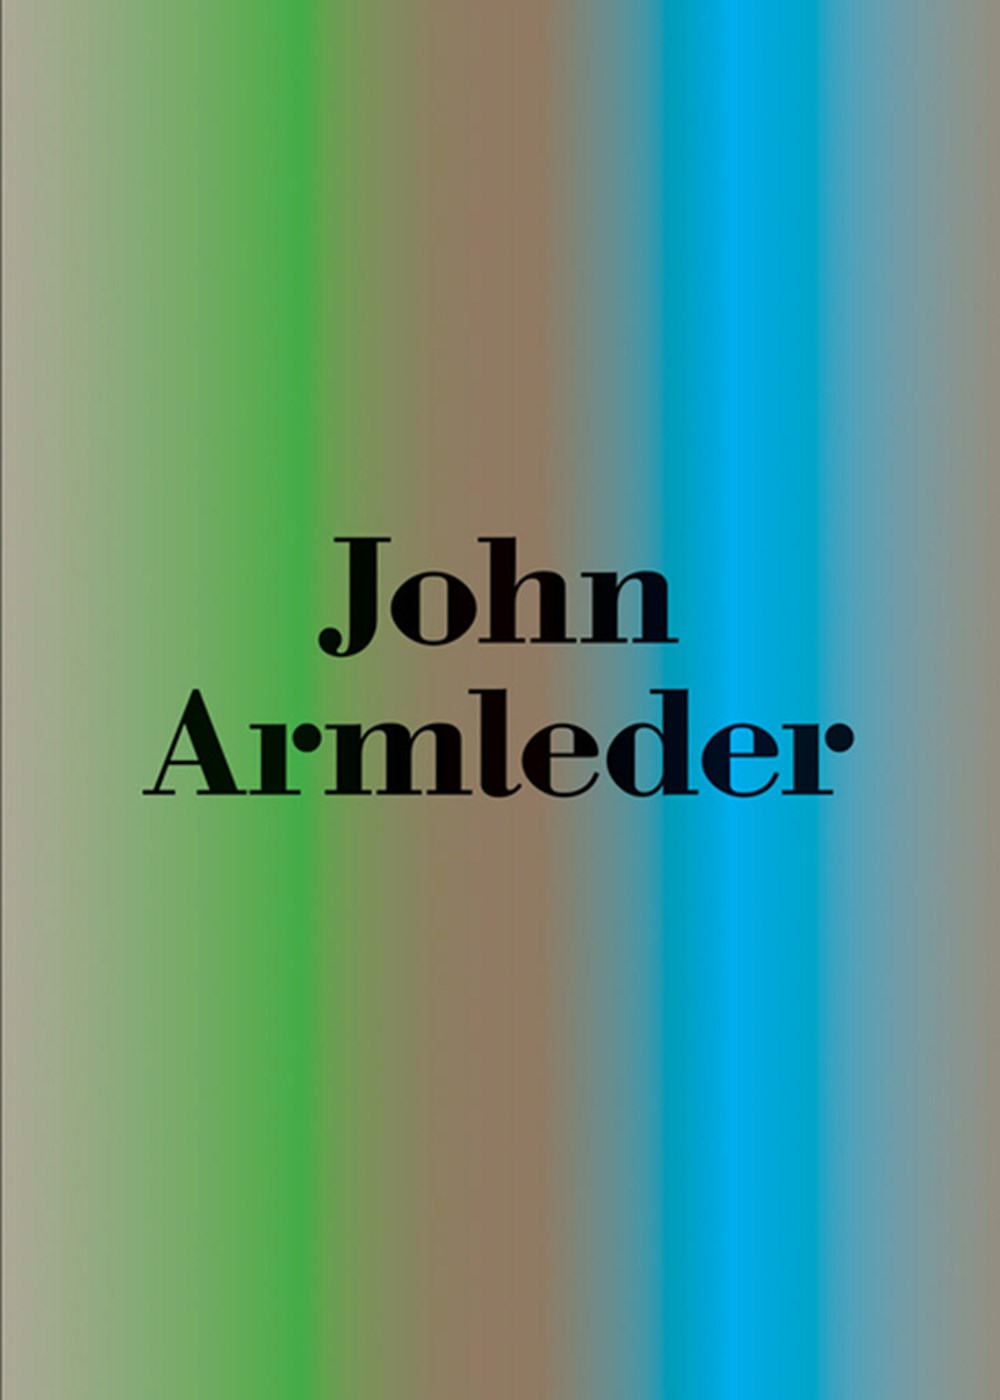 John Armleder: The Grand Tour